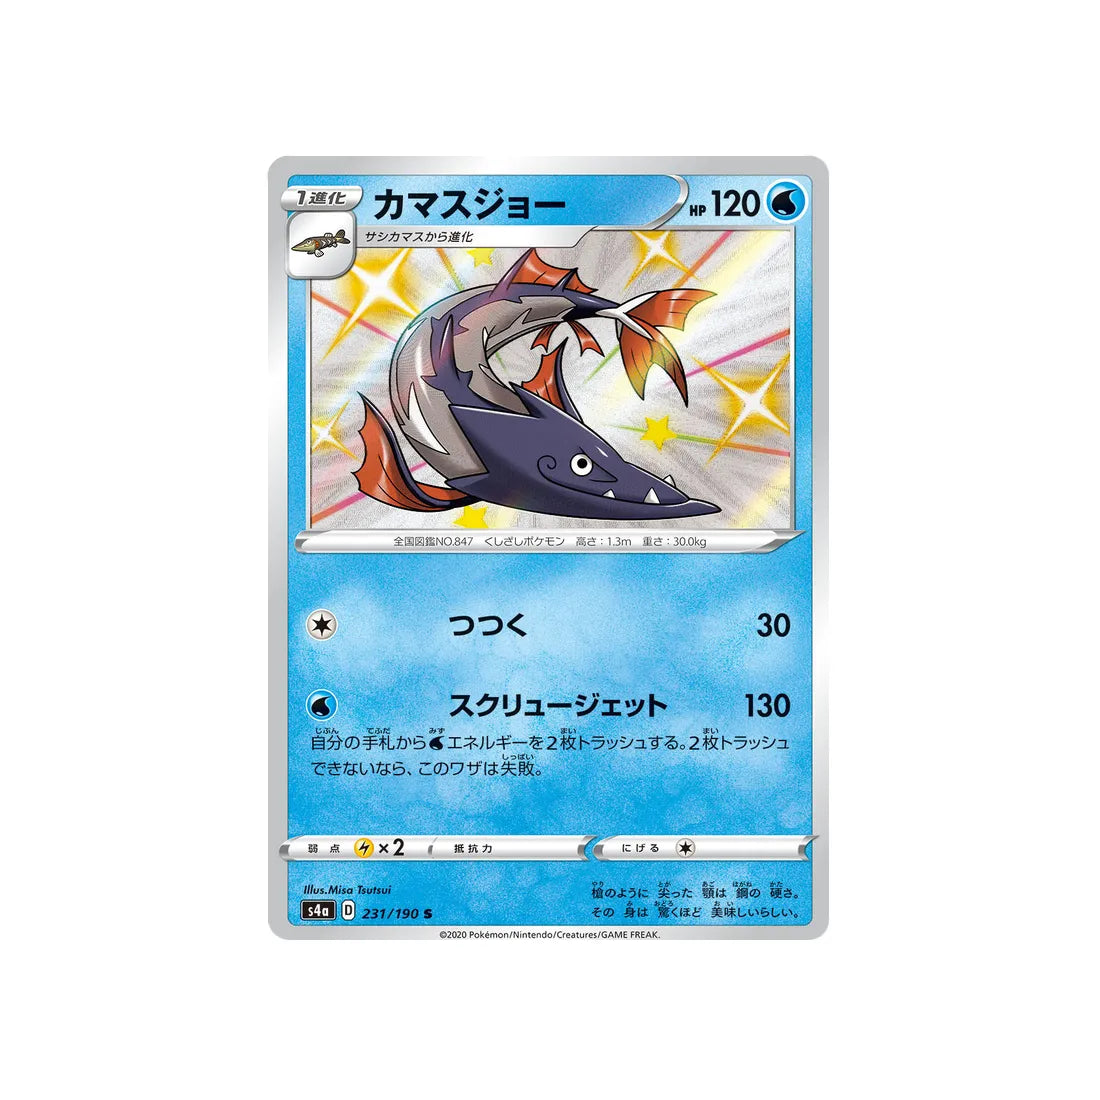 hastacuda-carte-pokemon-shiny-star-s4a-231